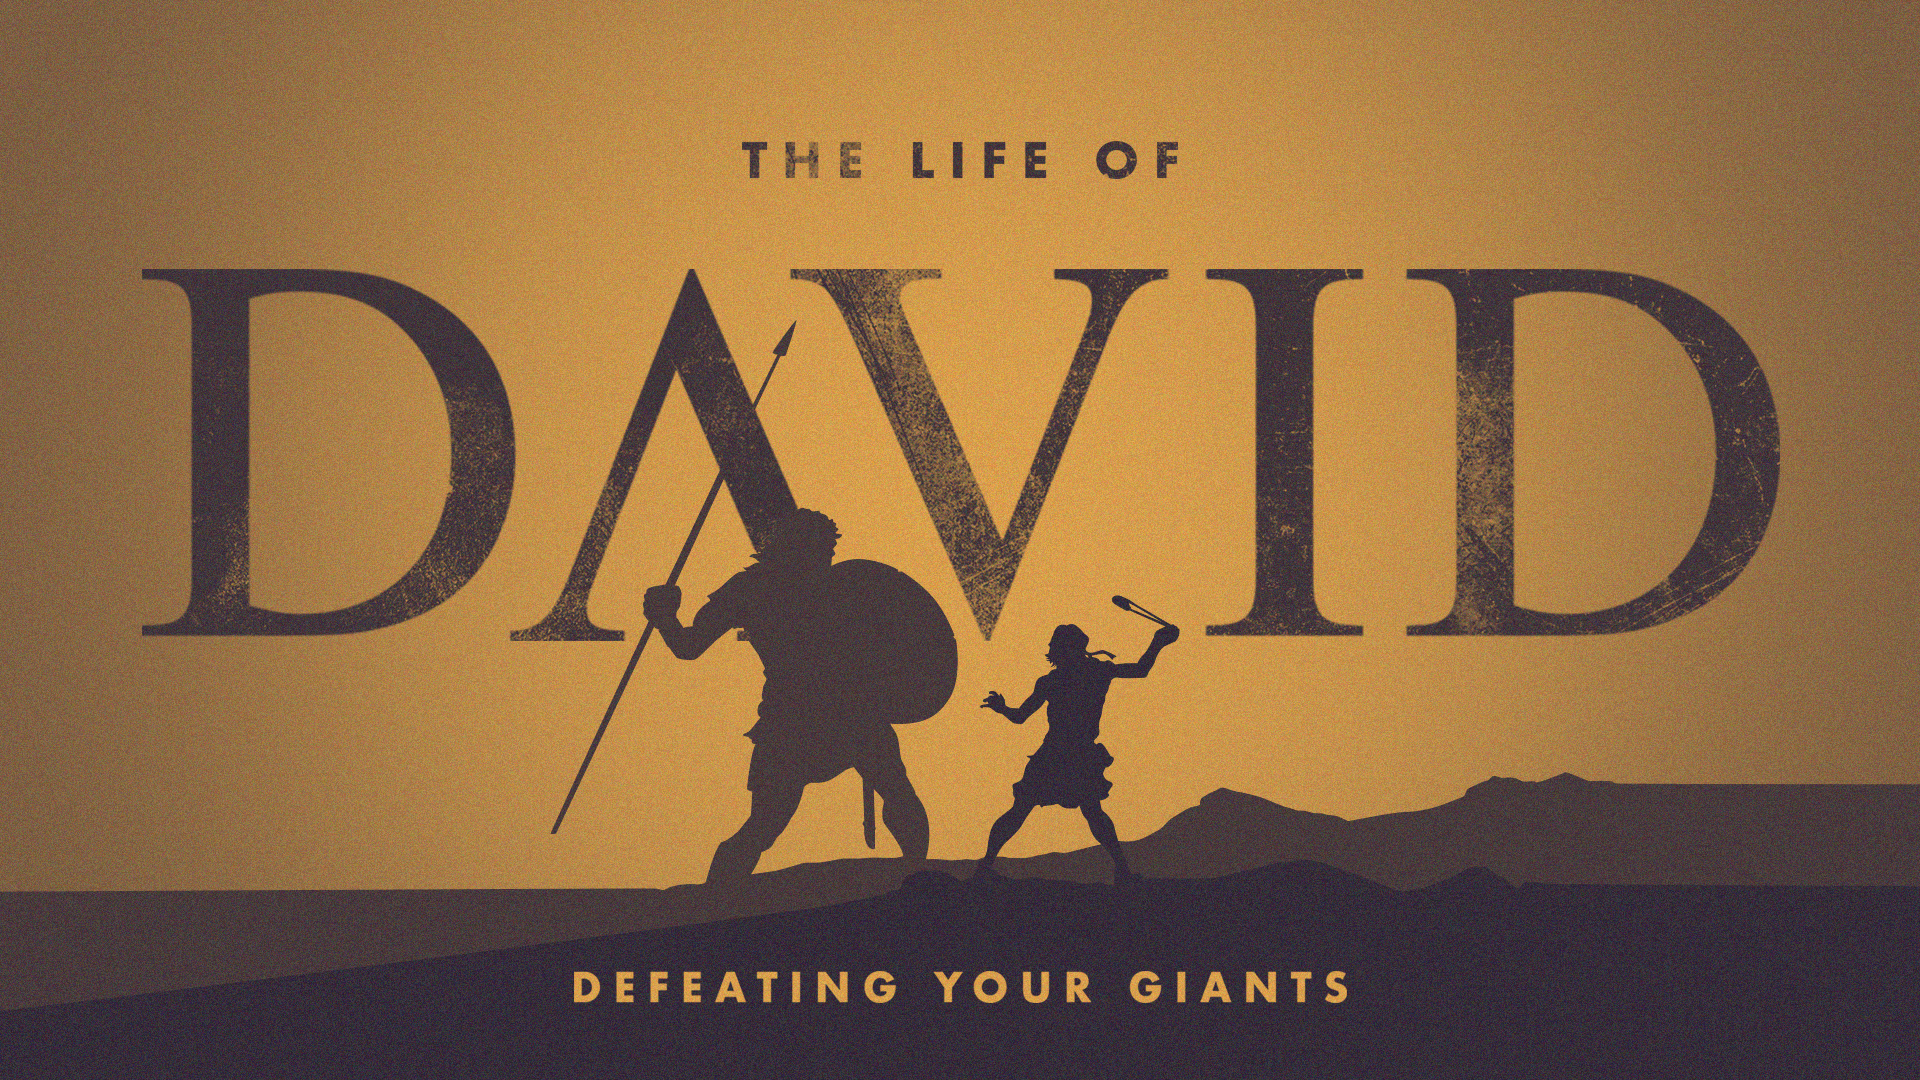 The Life of David | January 2018